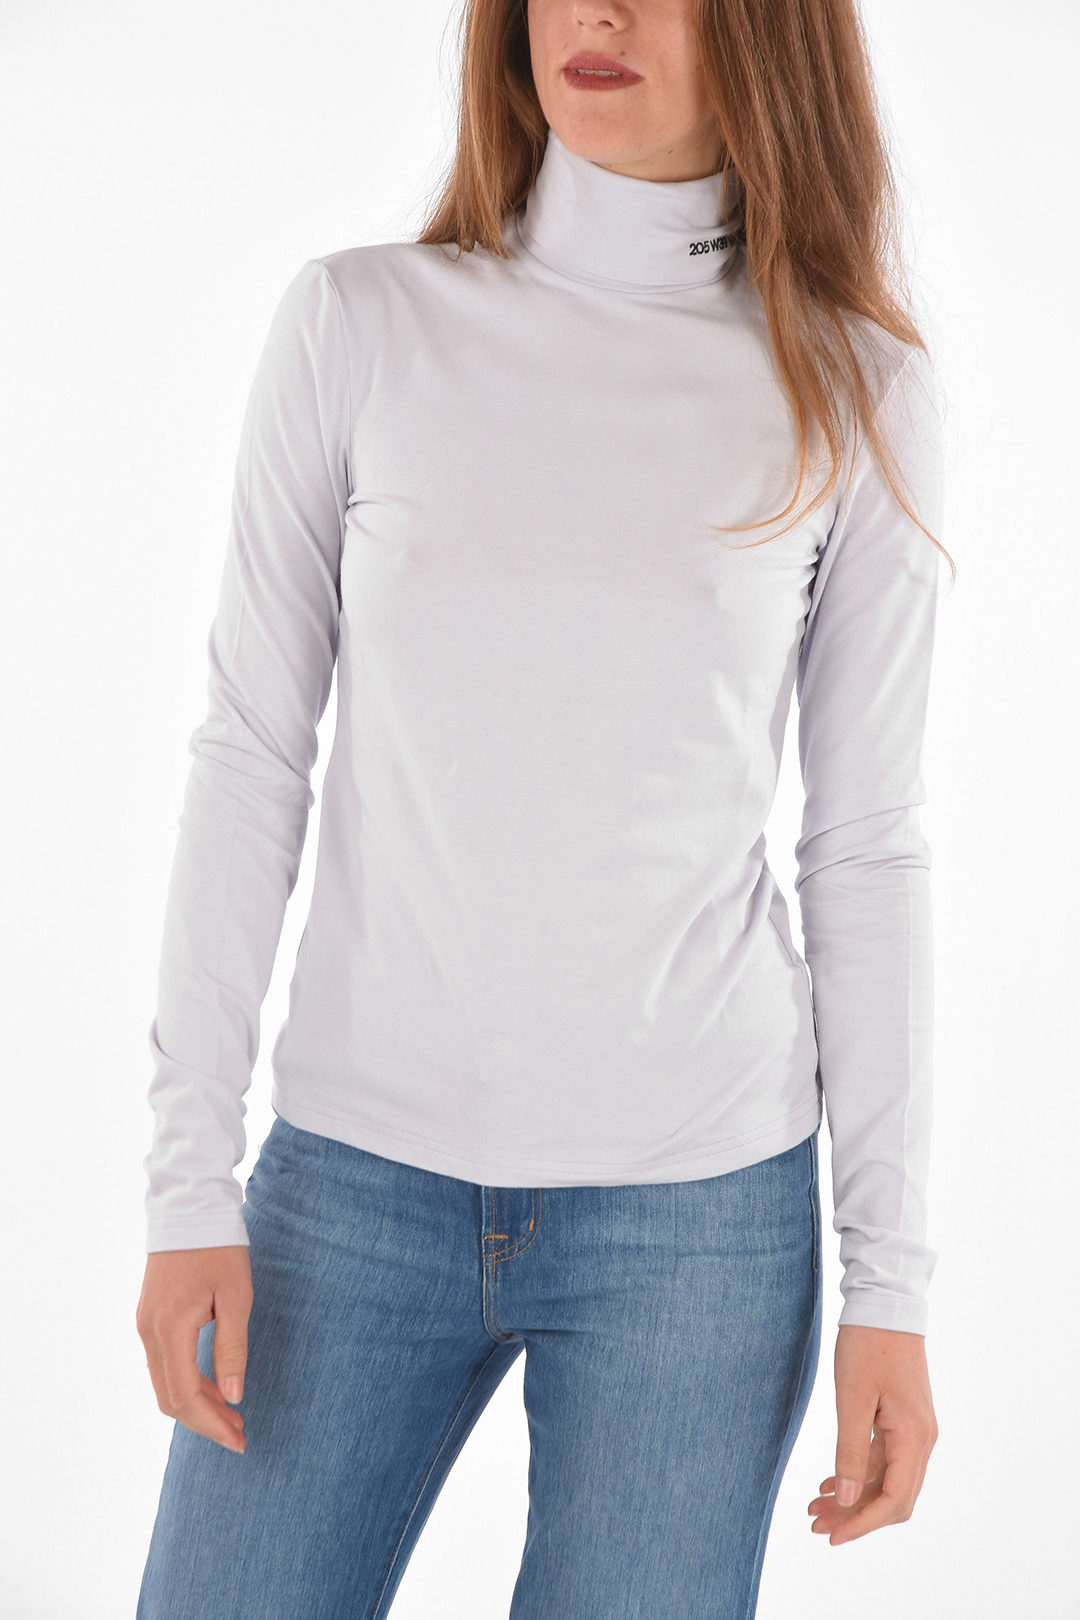 Calvin Klein 205W39NYC stretch cotton turtle-neck t-shirt women - Glamood  Outlet